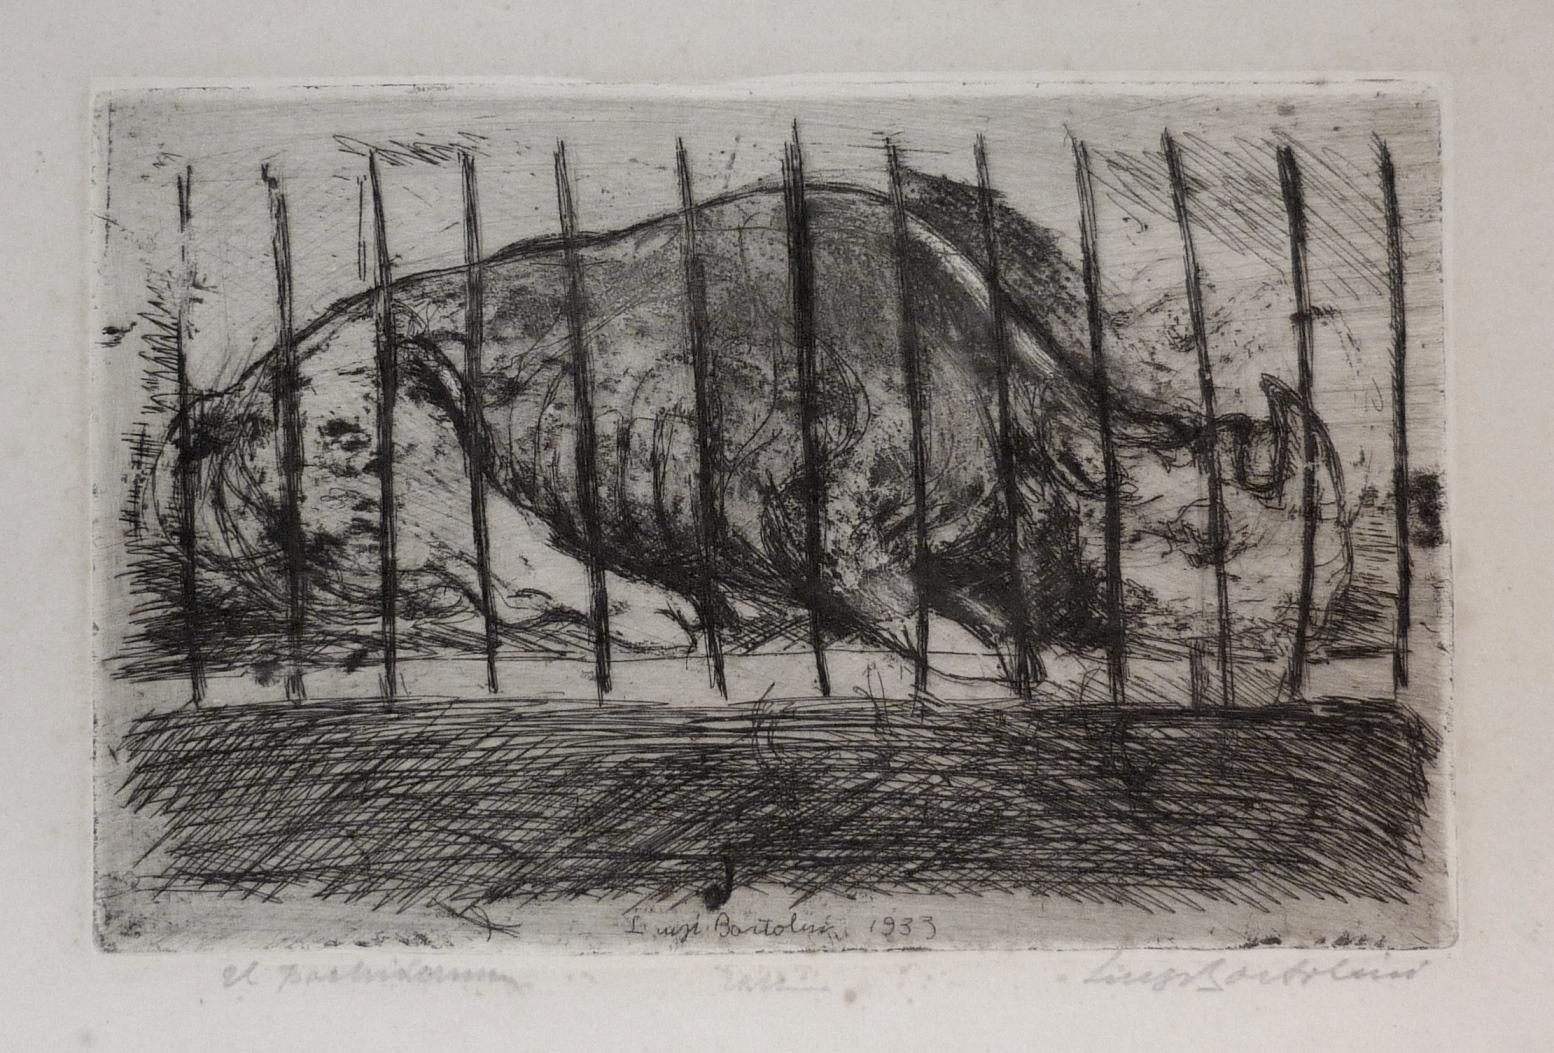 Luigi Bartolini, Acquaforte, Il rinoceronte grande 1933